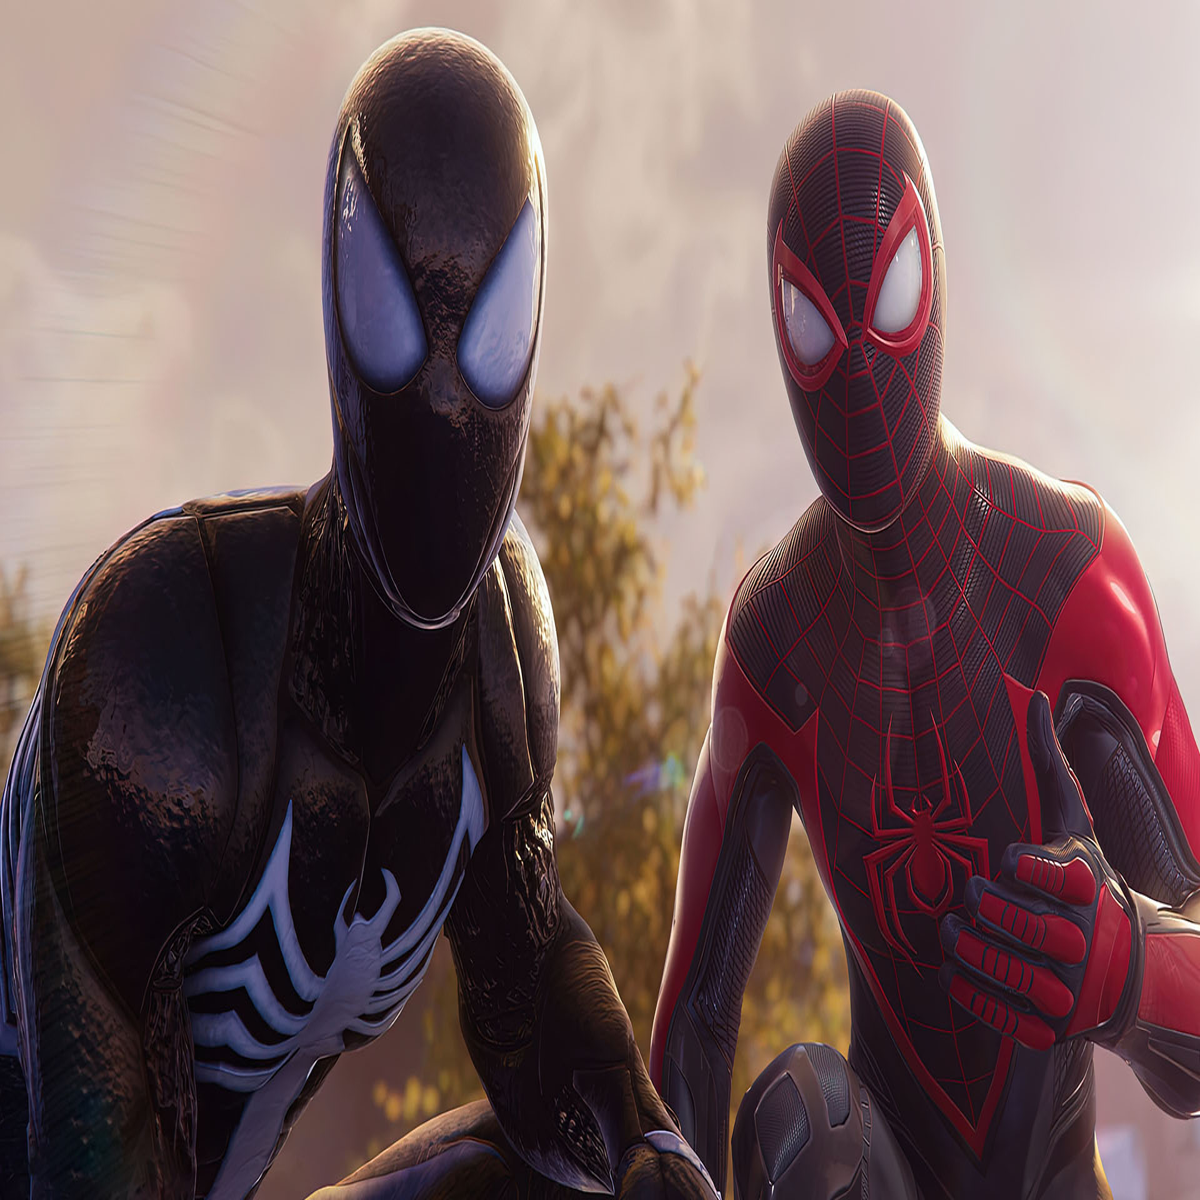 Spider-Man: Web of Shadows - Trailer - High quality stream and